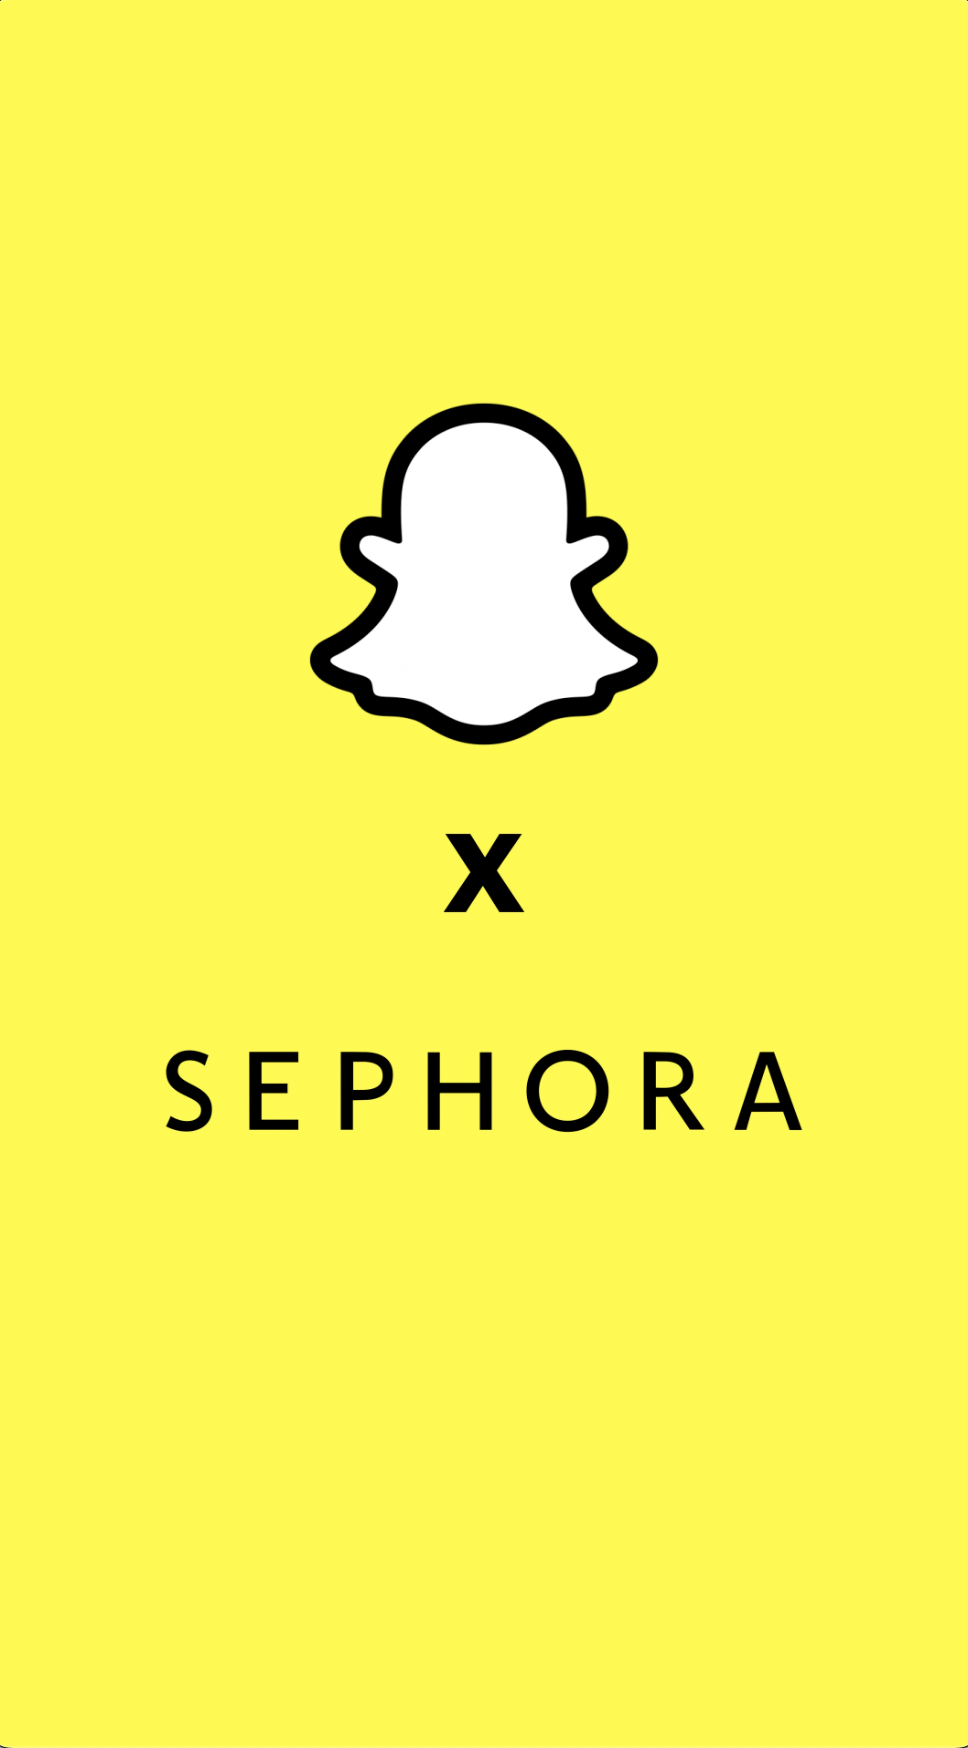 CSG Snapshot: Sephora USA Inc. - Chain Store Guide